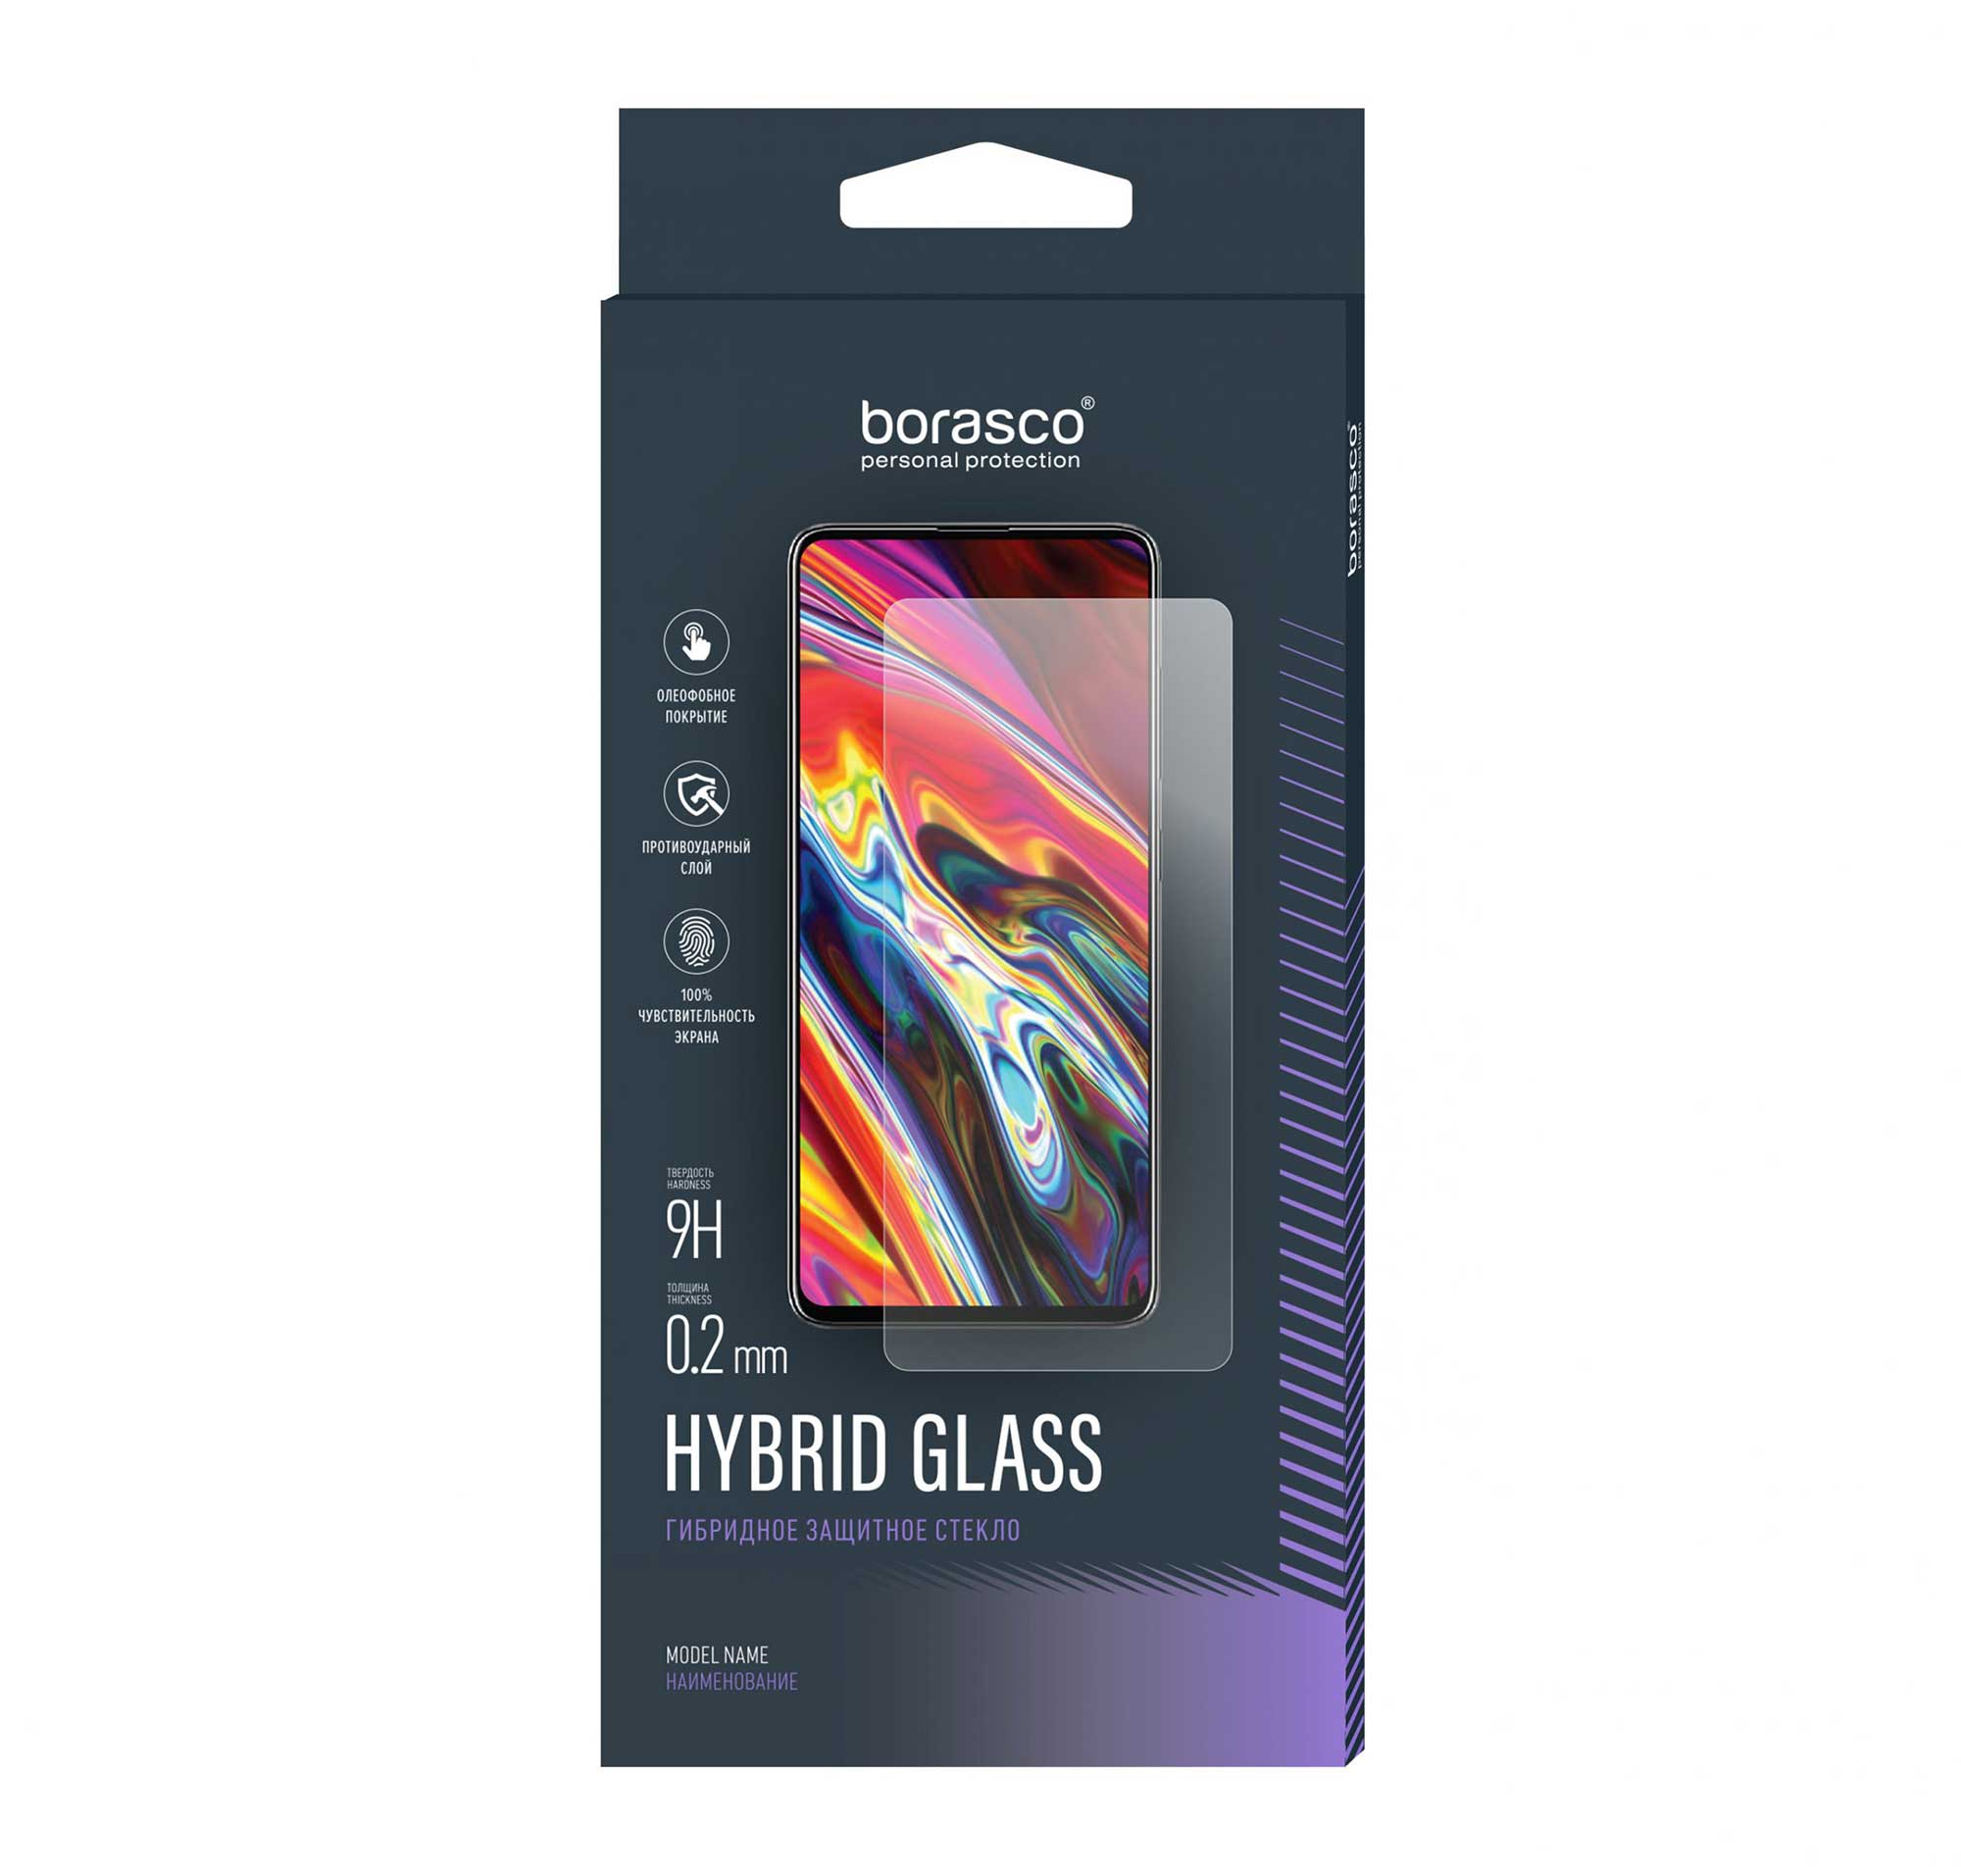 Защитное стекло BoraSCO Hybrid Glass для ZTE Blade A51 пленка защитная zte защитное стекло для телефона zte blade a51